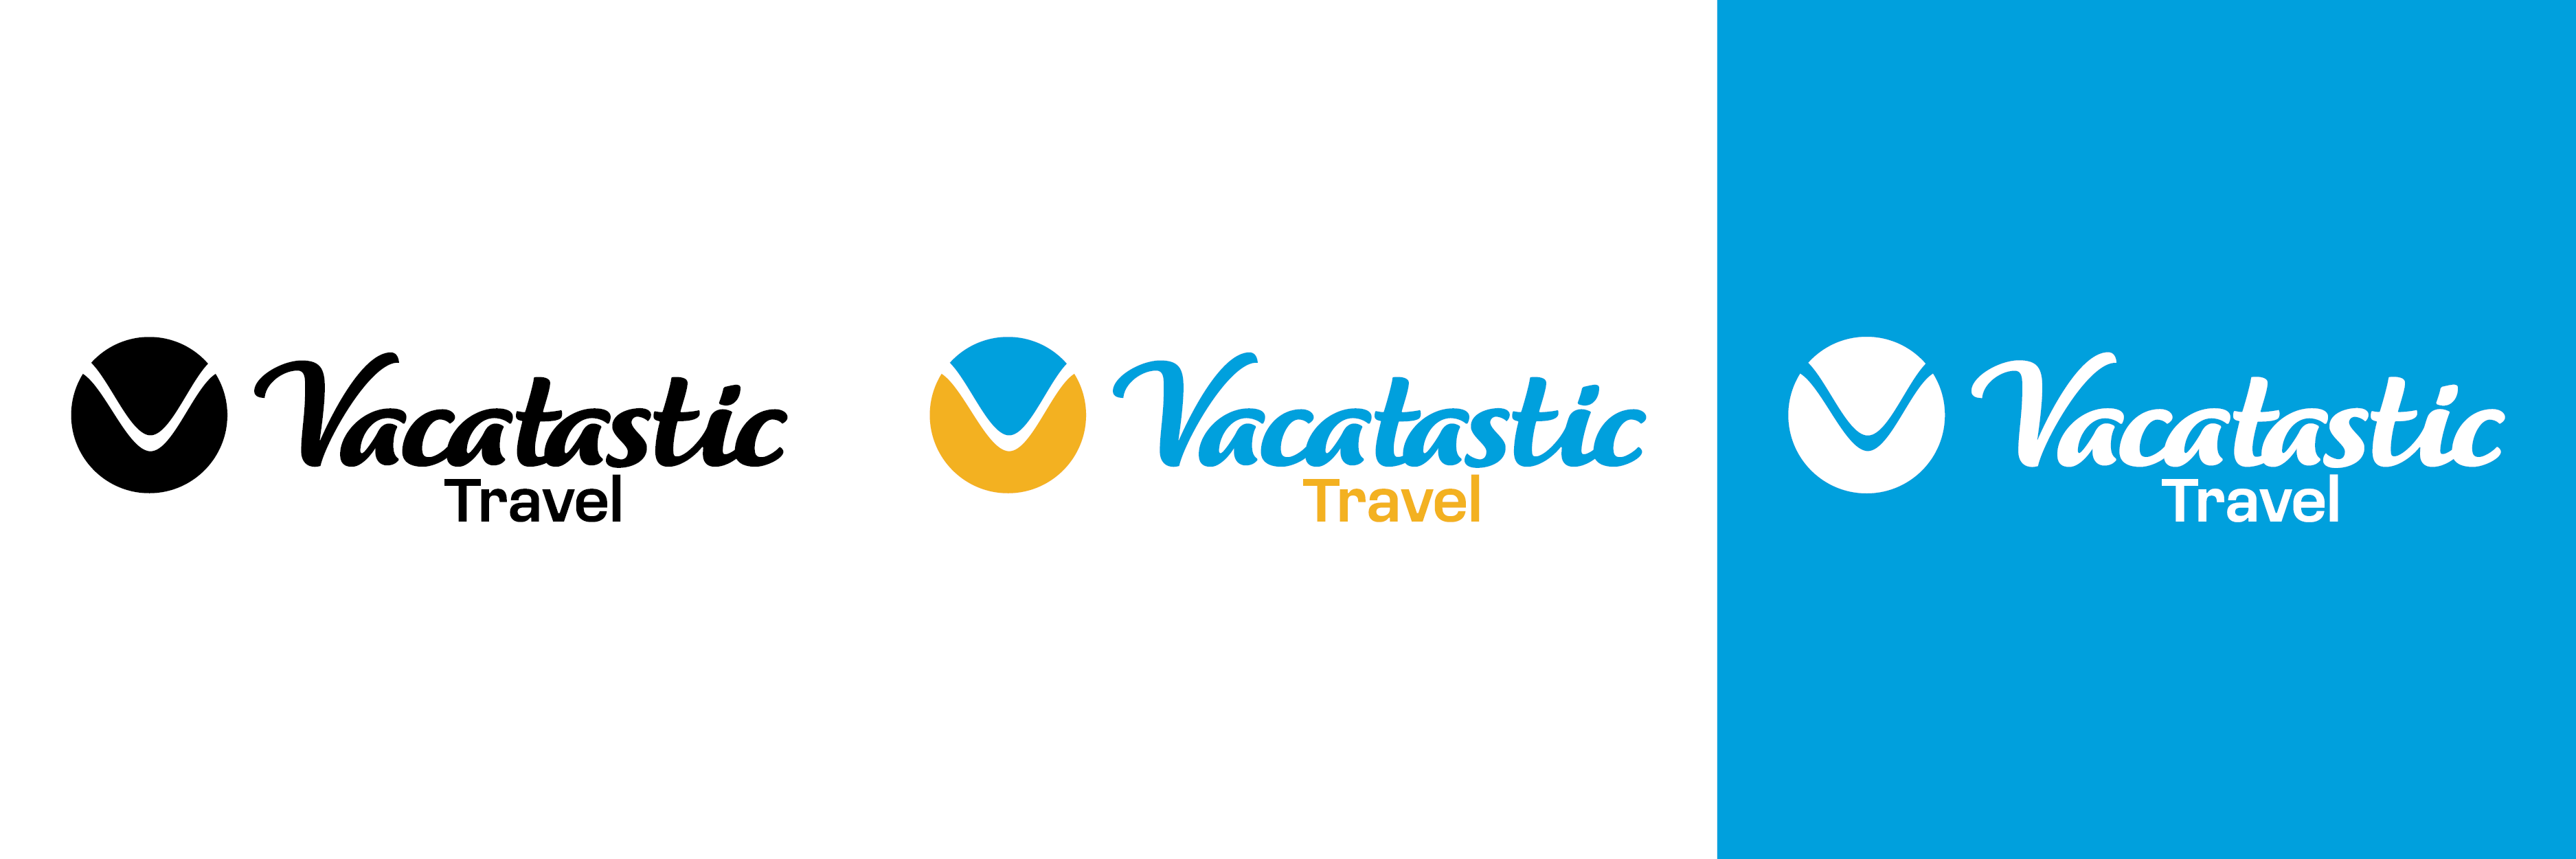 Final version of Vacatastic logo